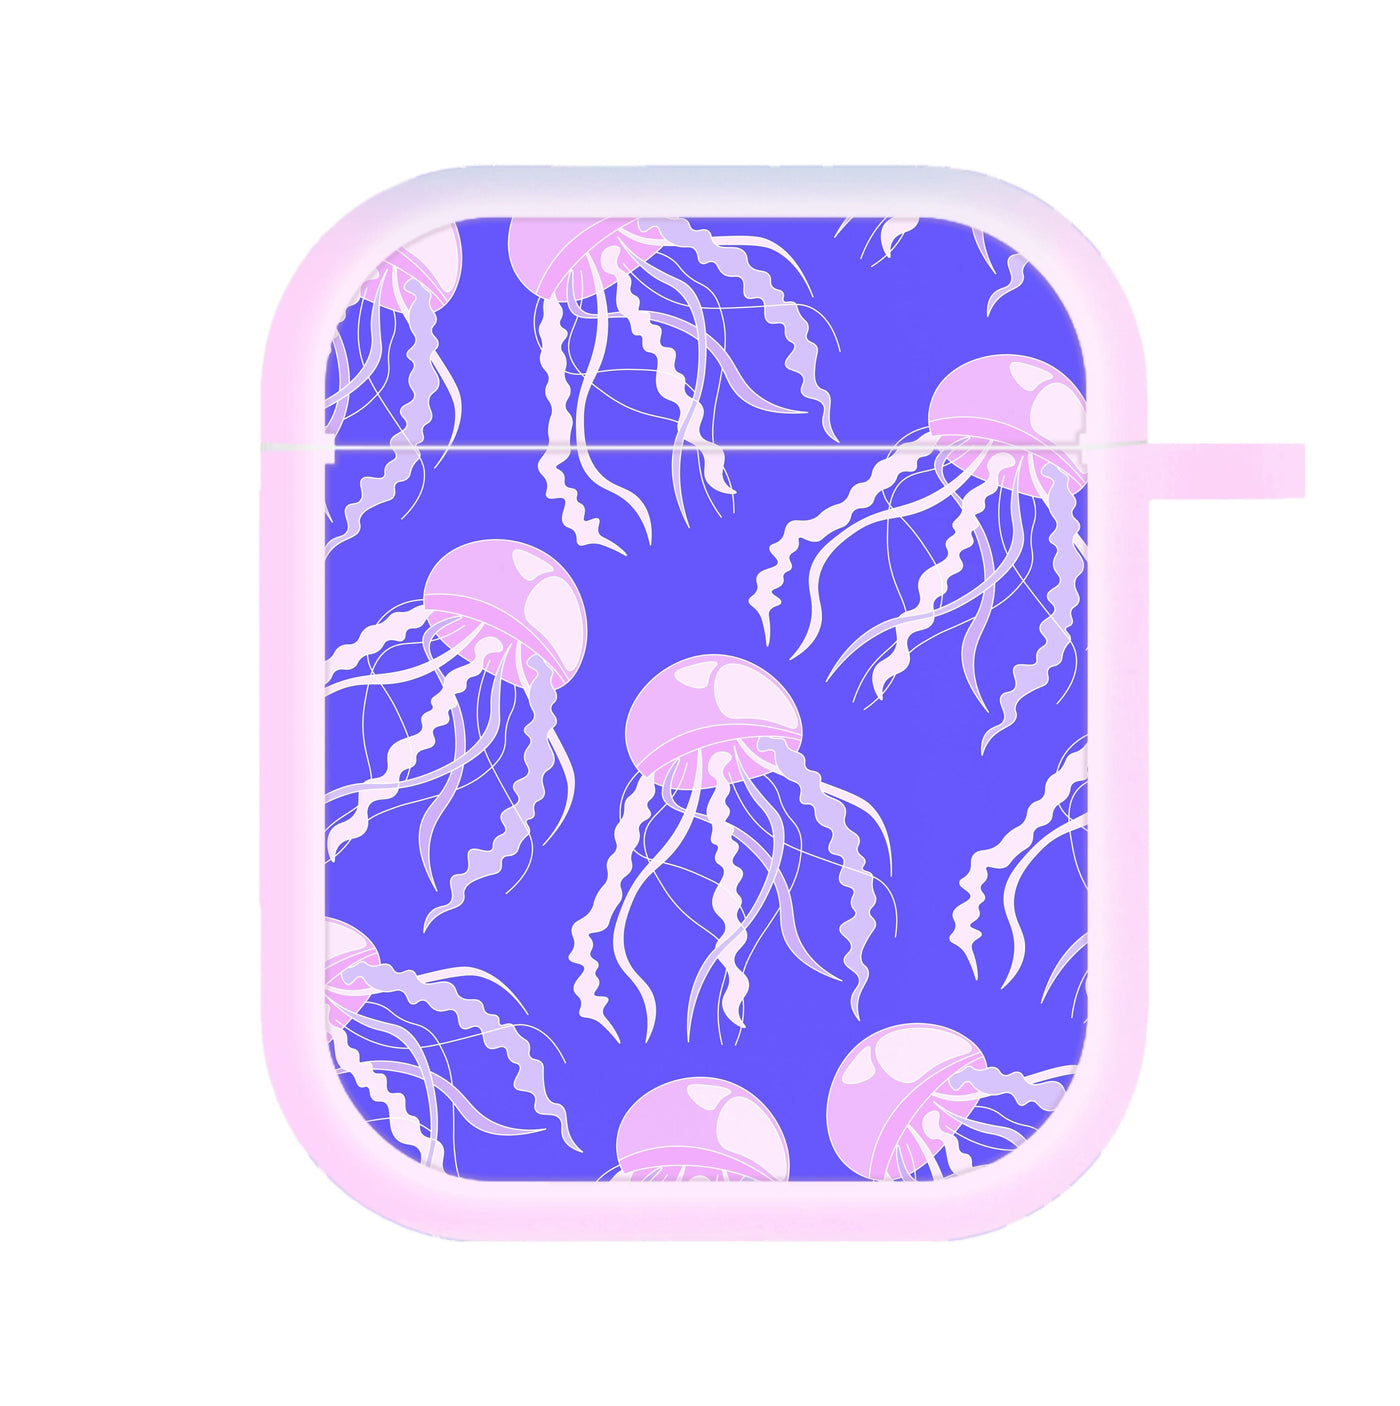 Jellyfish Pattern - Sealife AirPods Case